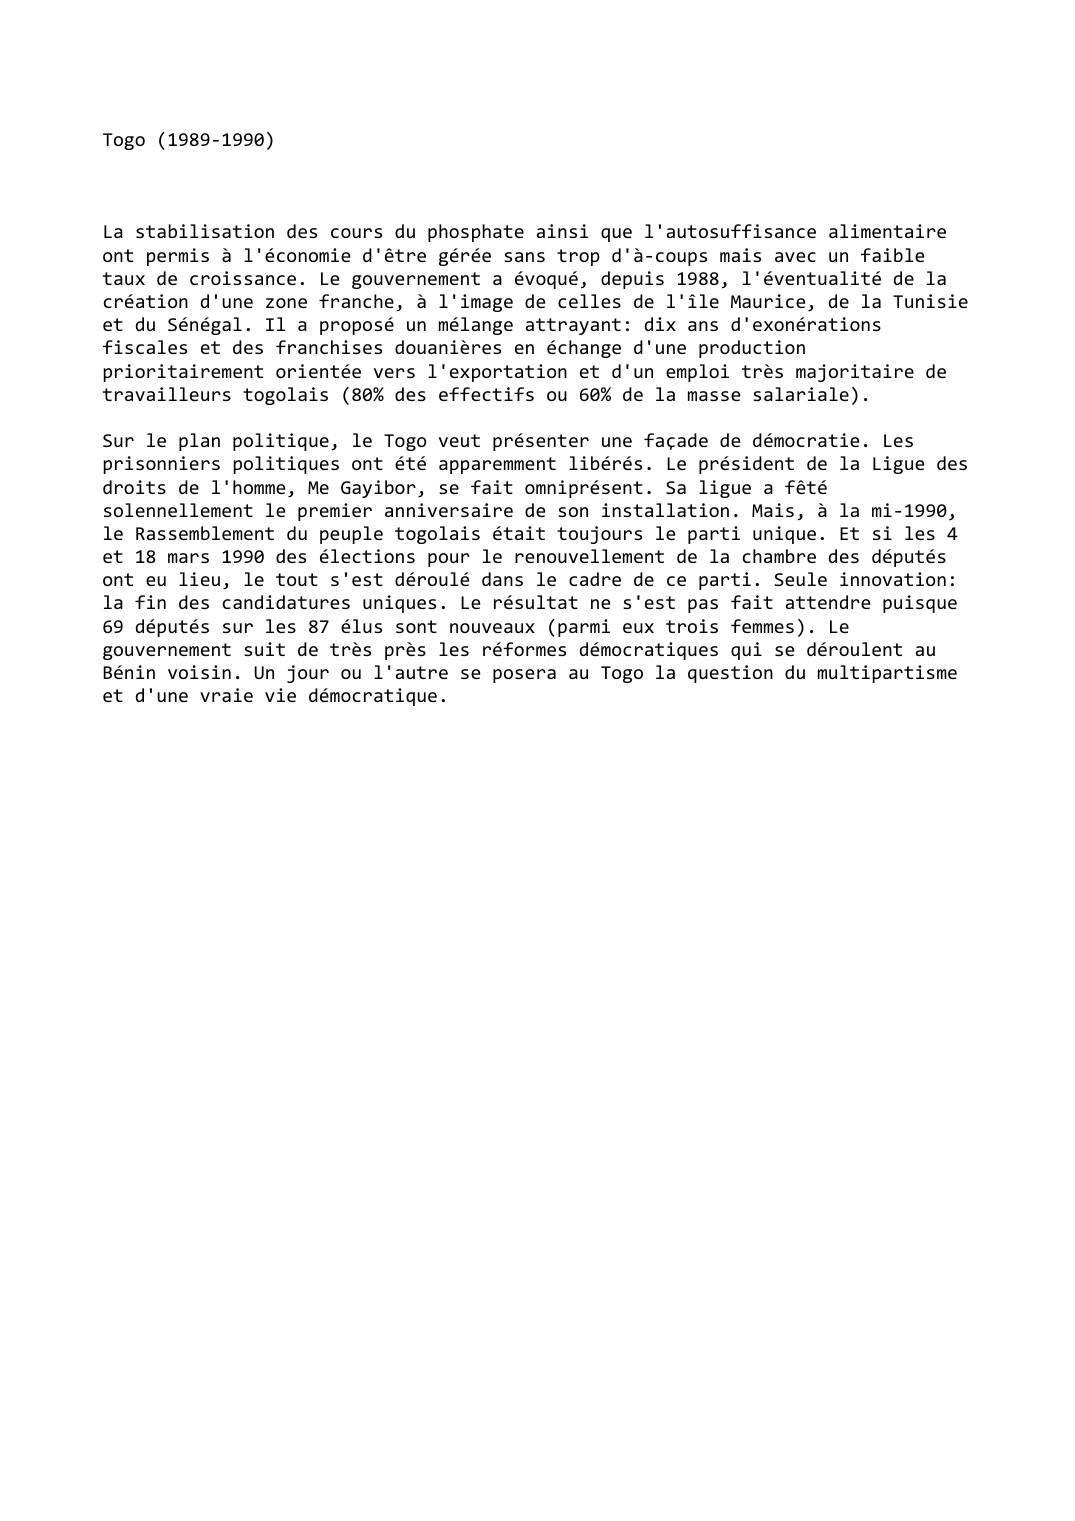 Prévisualisation du document Togo (1989-1990)